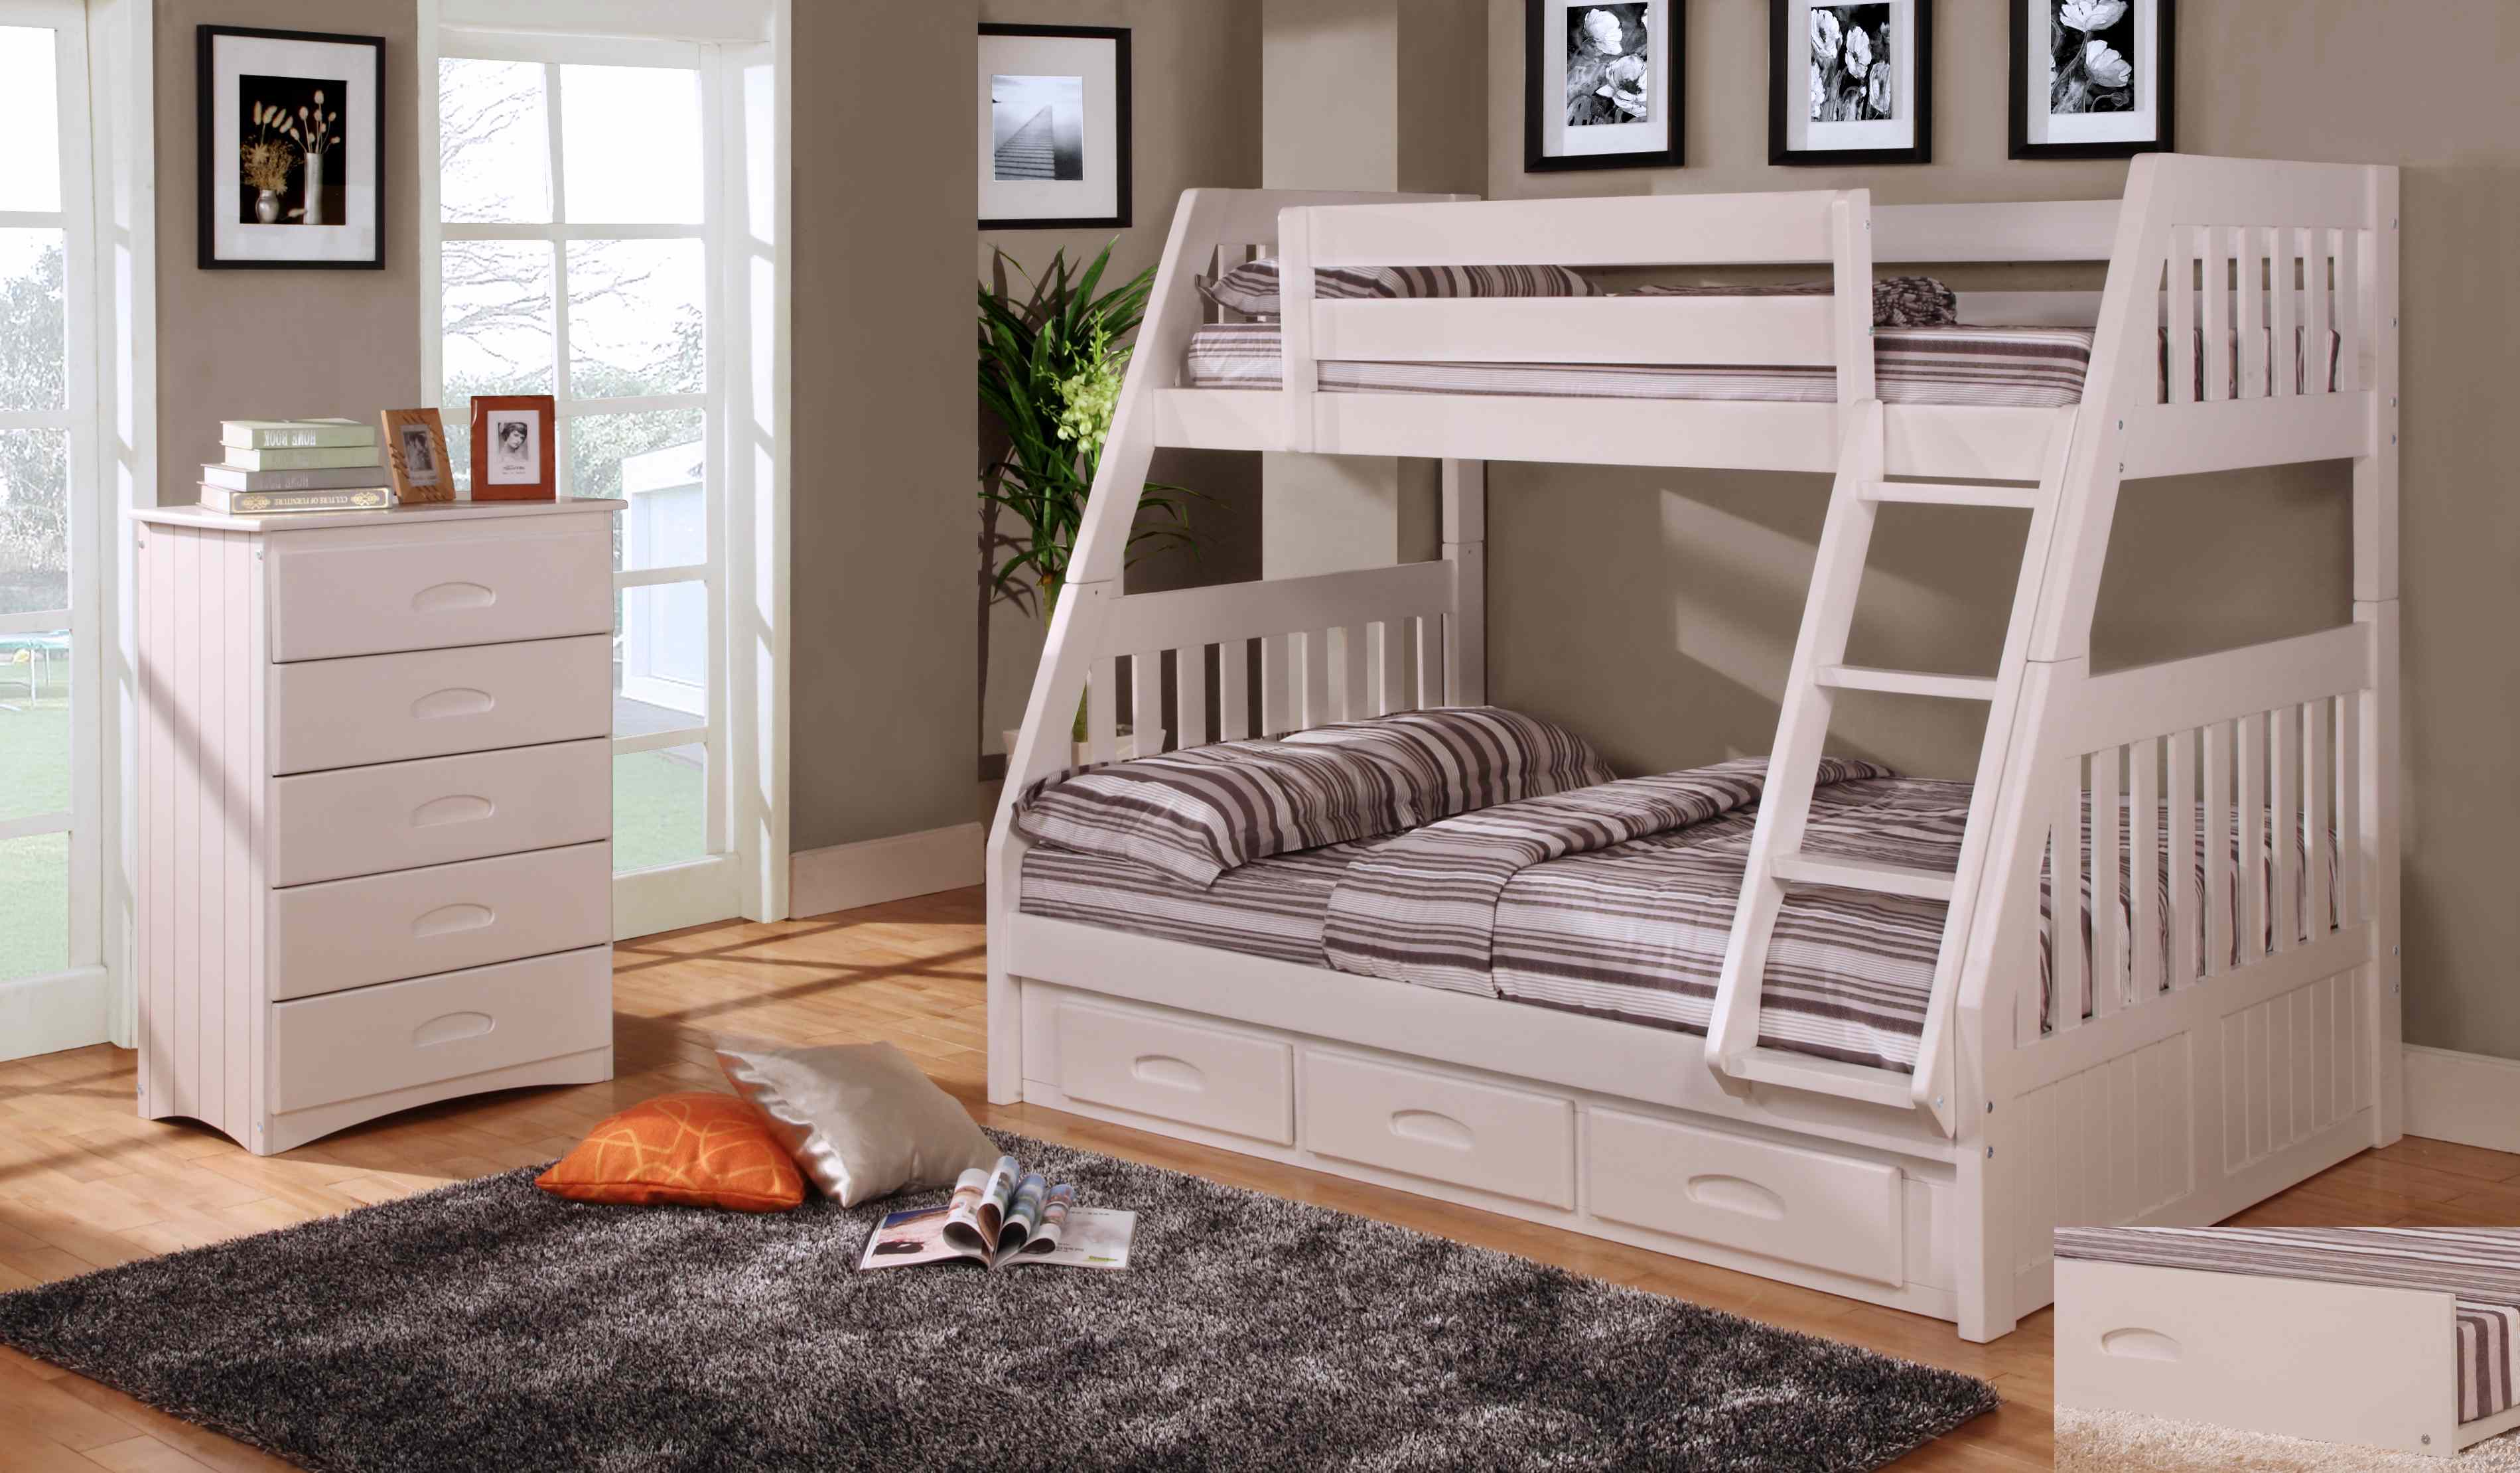 Kids Bunk Bedroom Sets New Daily Offers, Kids Bunk Bed Bedroom Sets